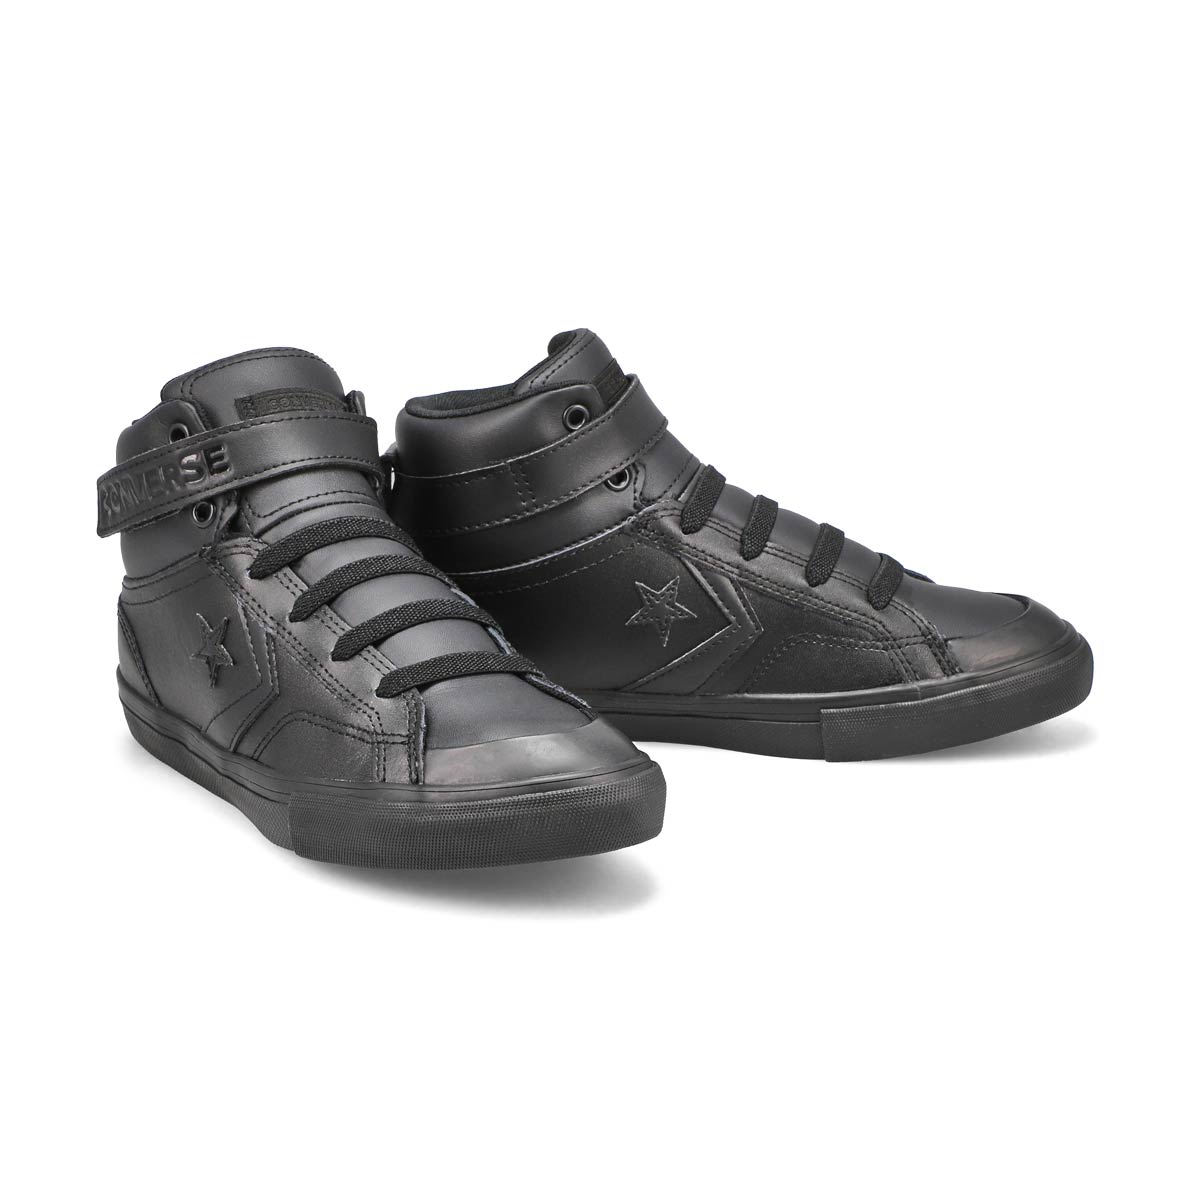 Boys' Chuck Taylor All Star Pro Blaze Strap Leather Sneaker - Black/Black